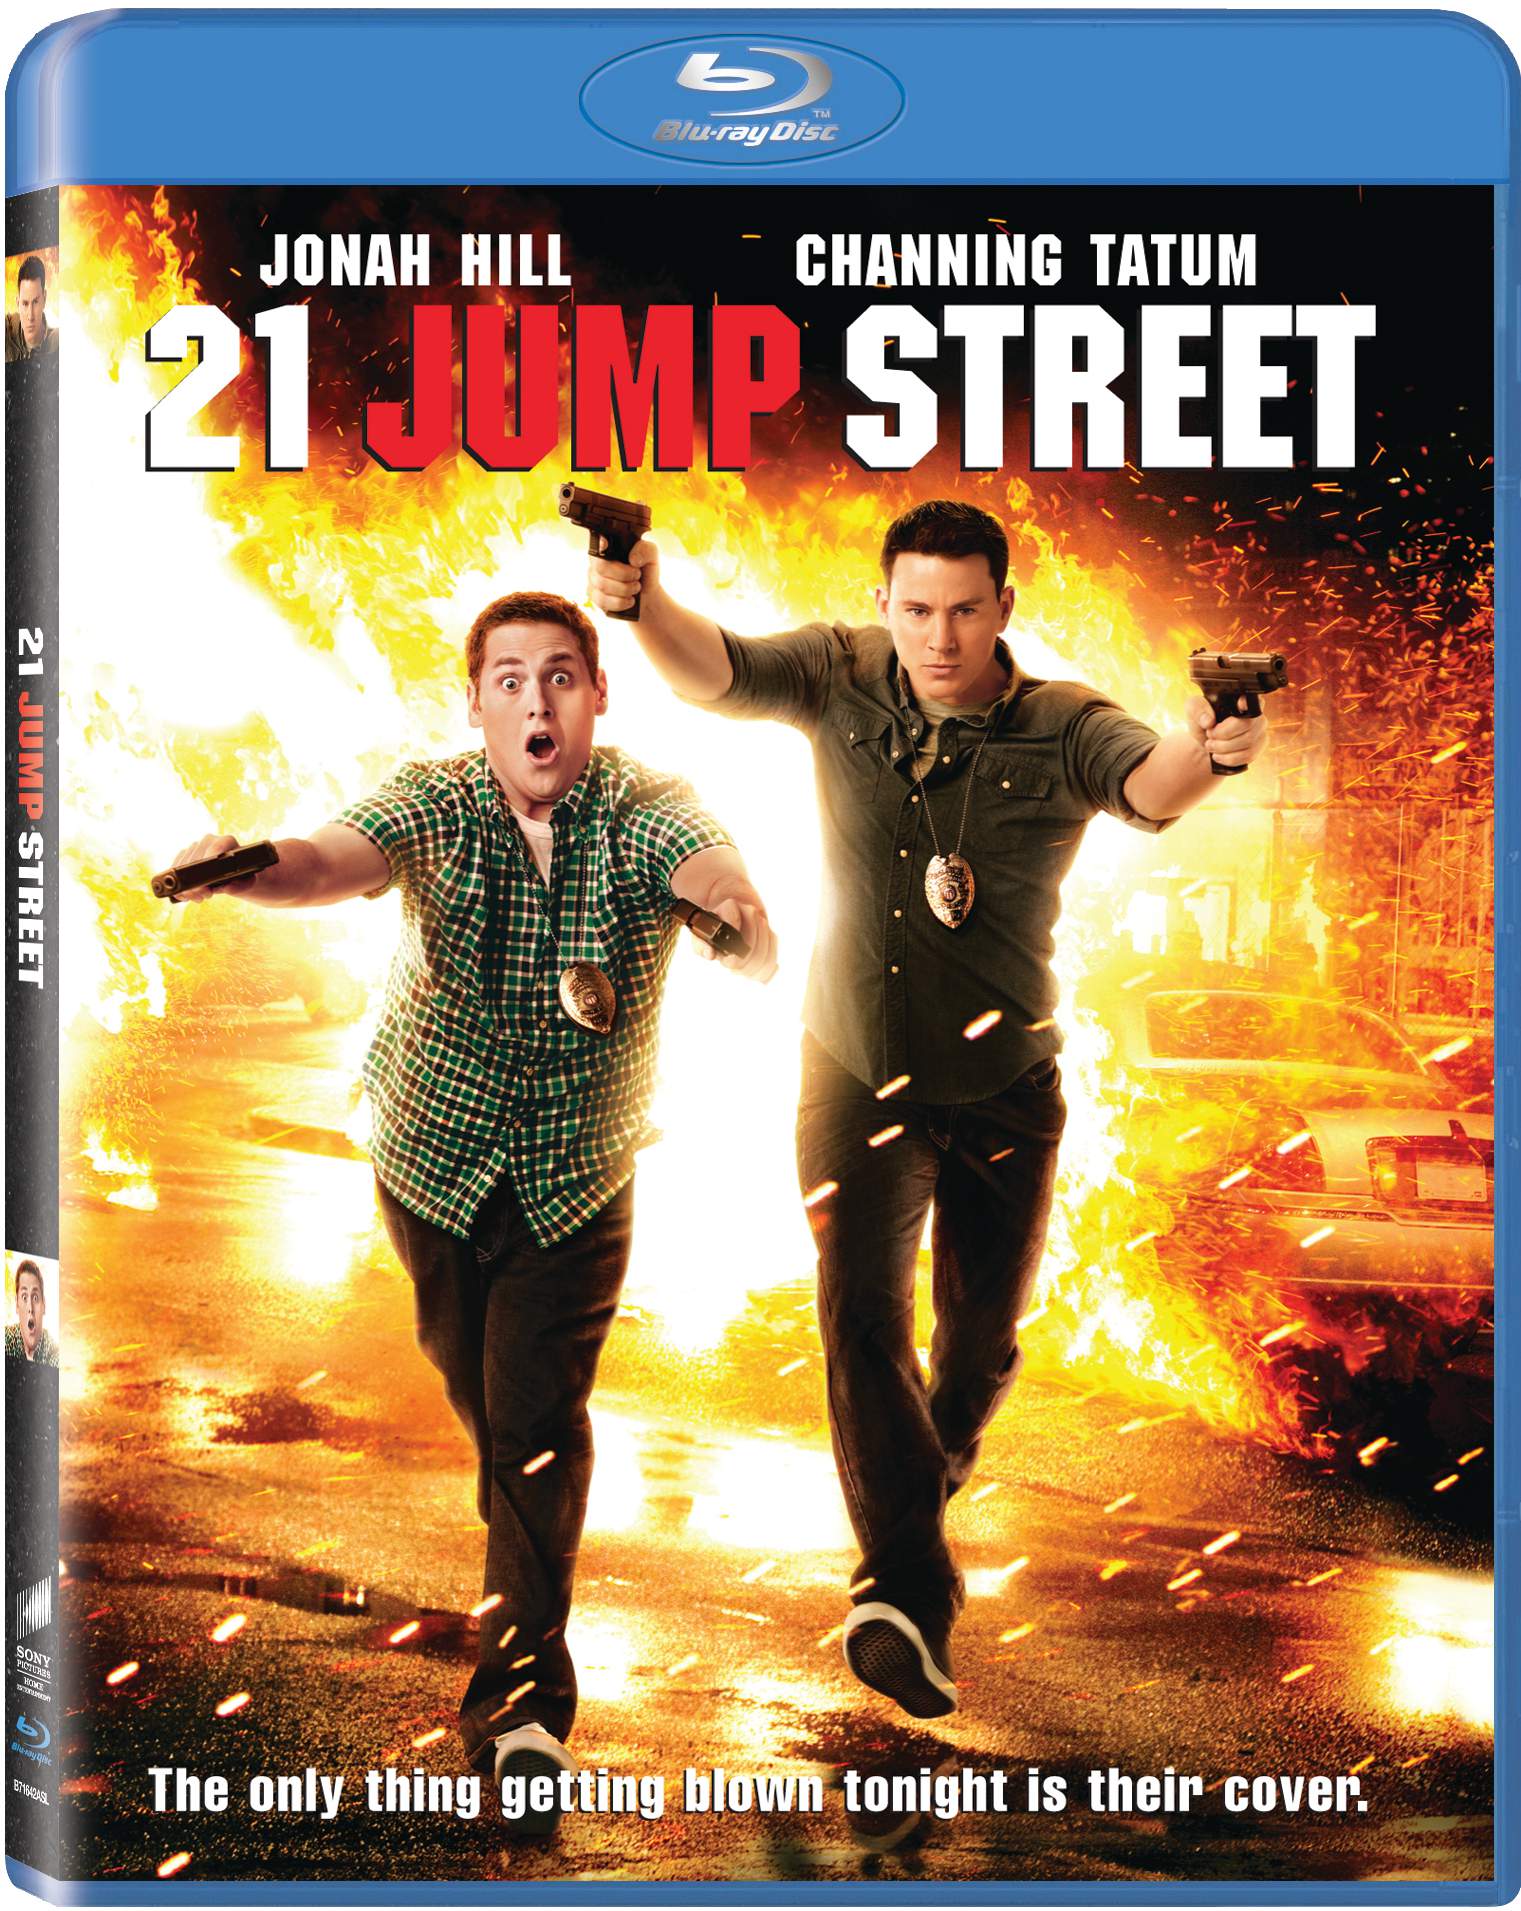 watch 21 jump street full movie free 2012